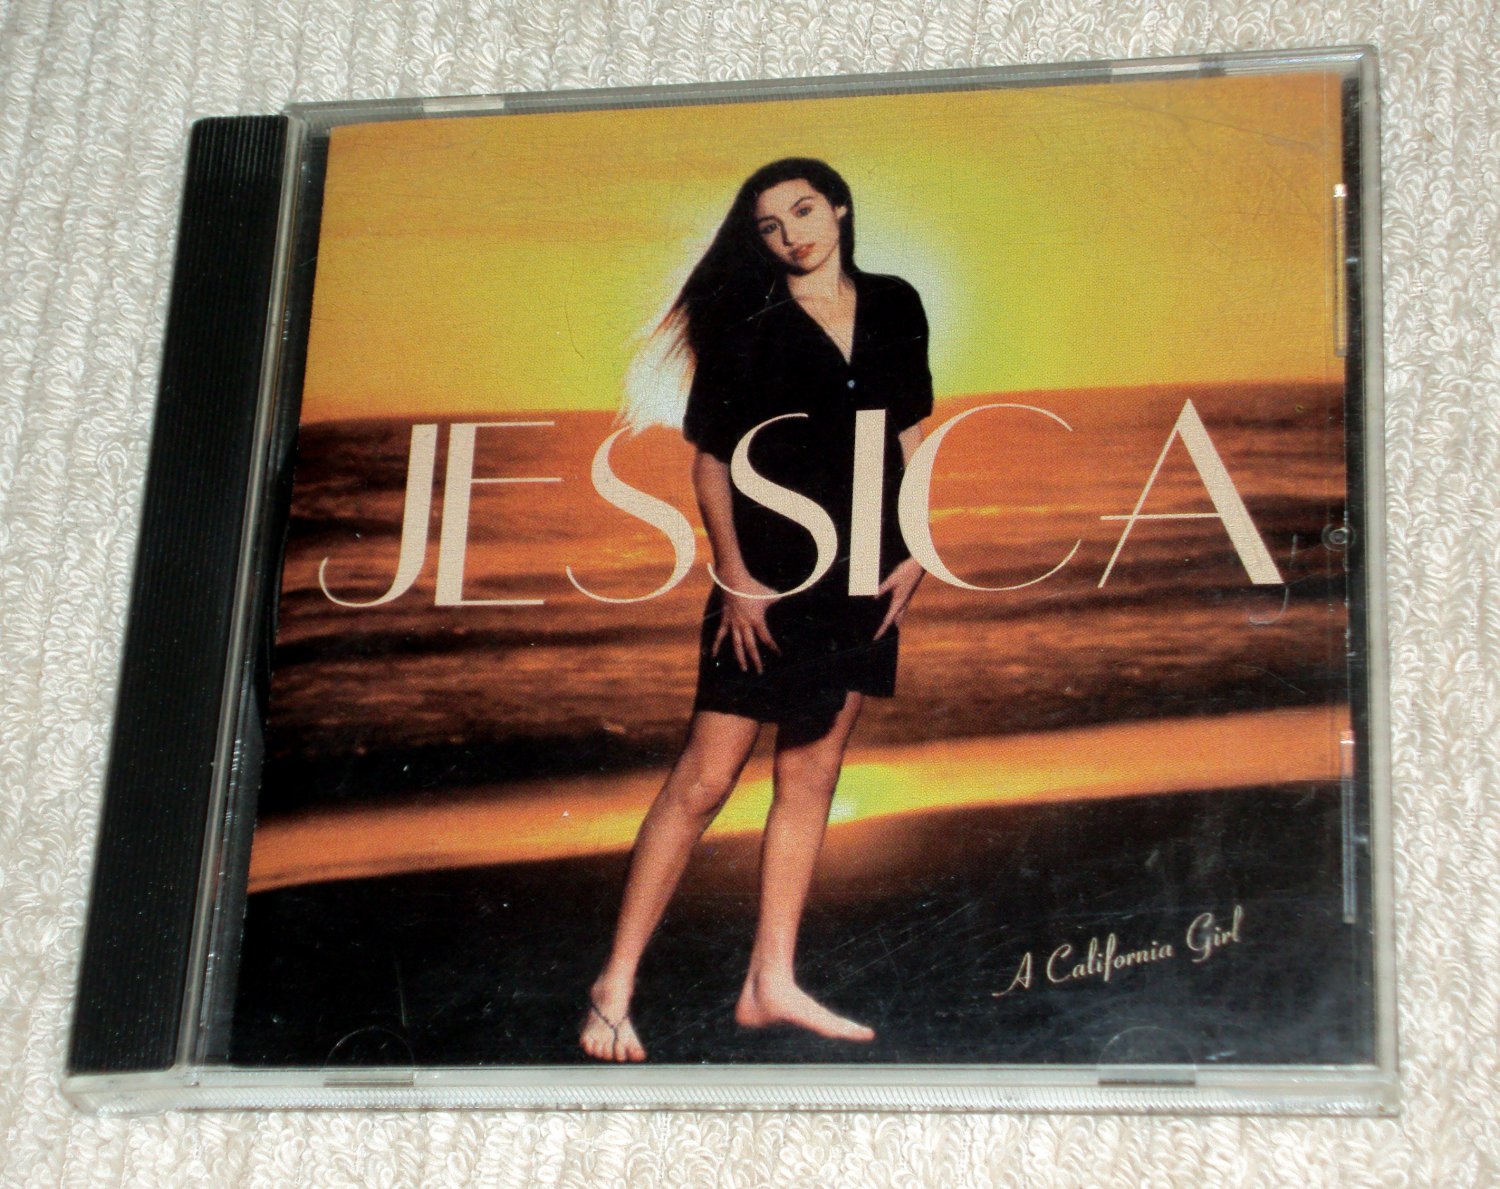 Jessica – A California Girl (CD, 12 Tracks)